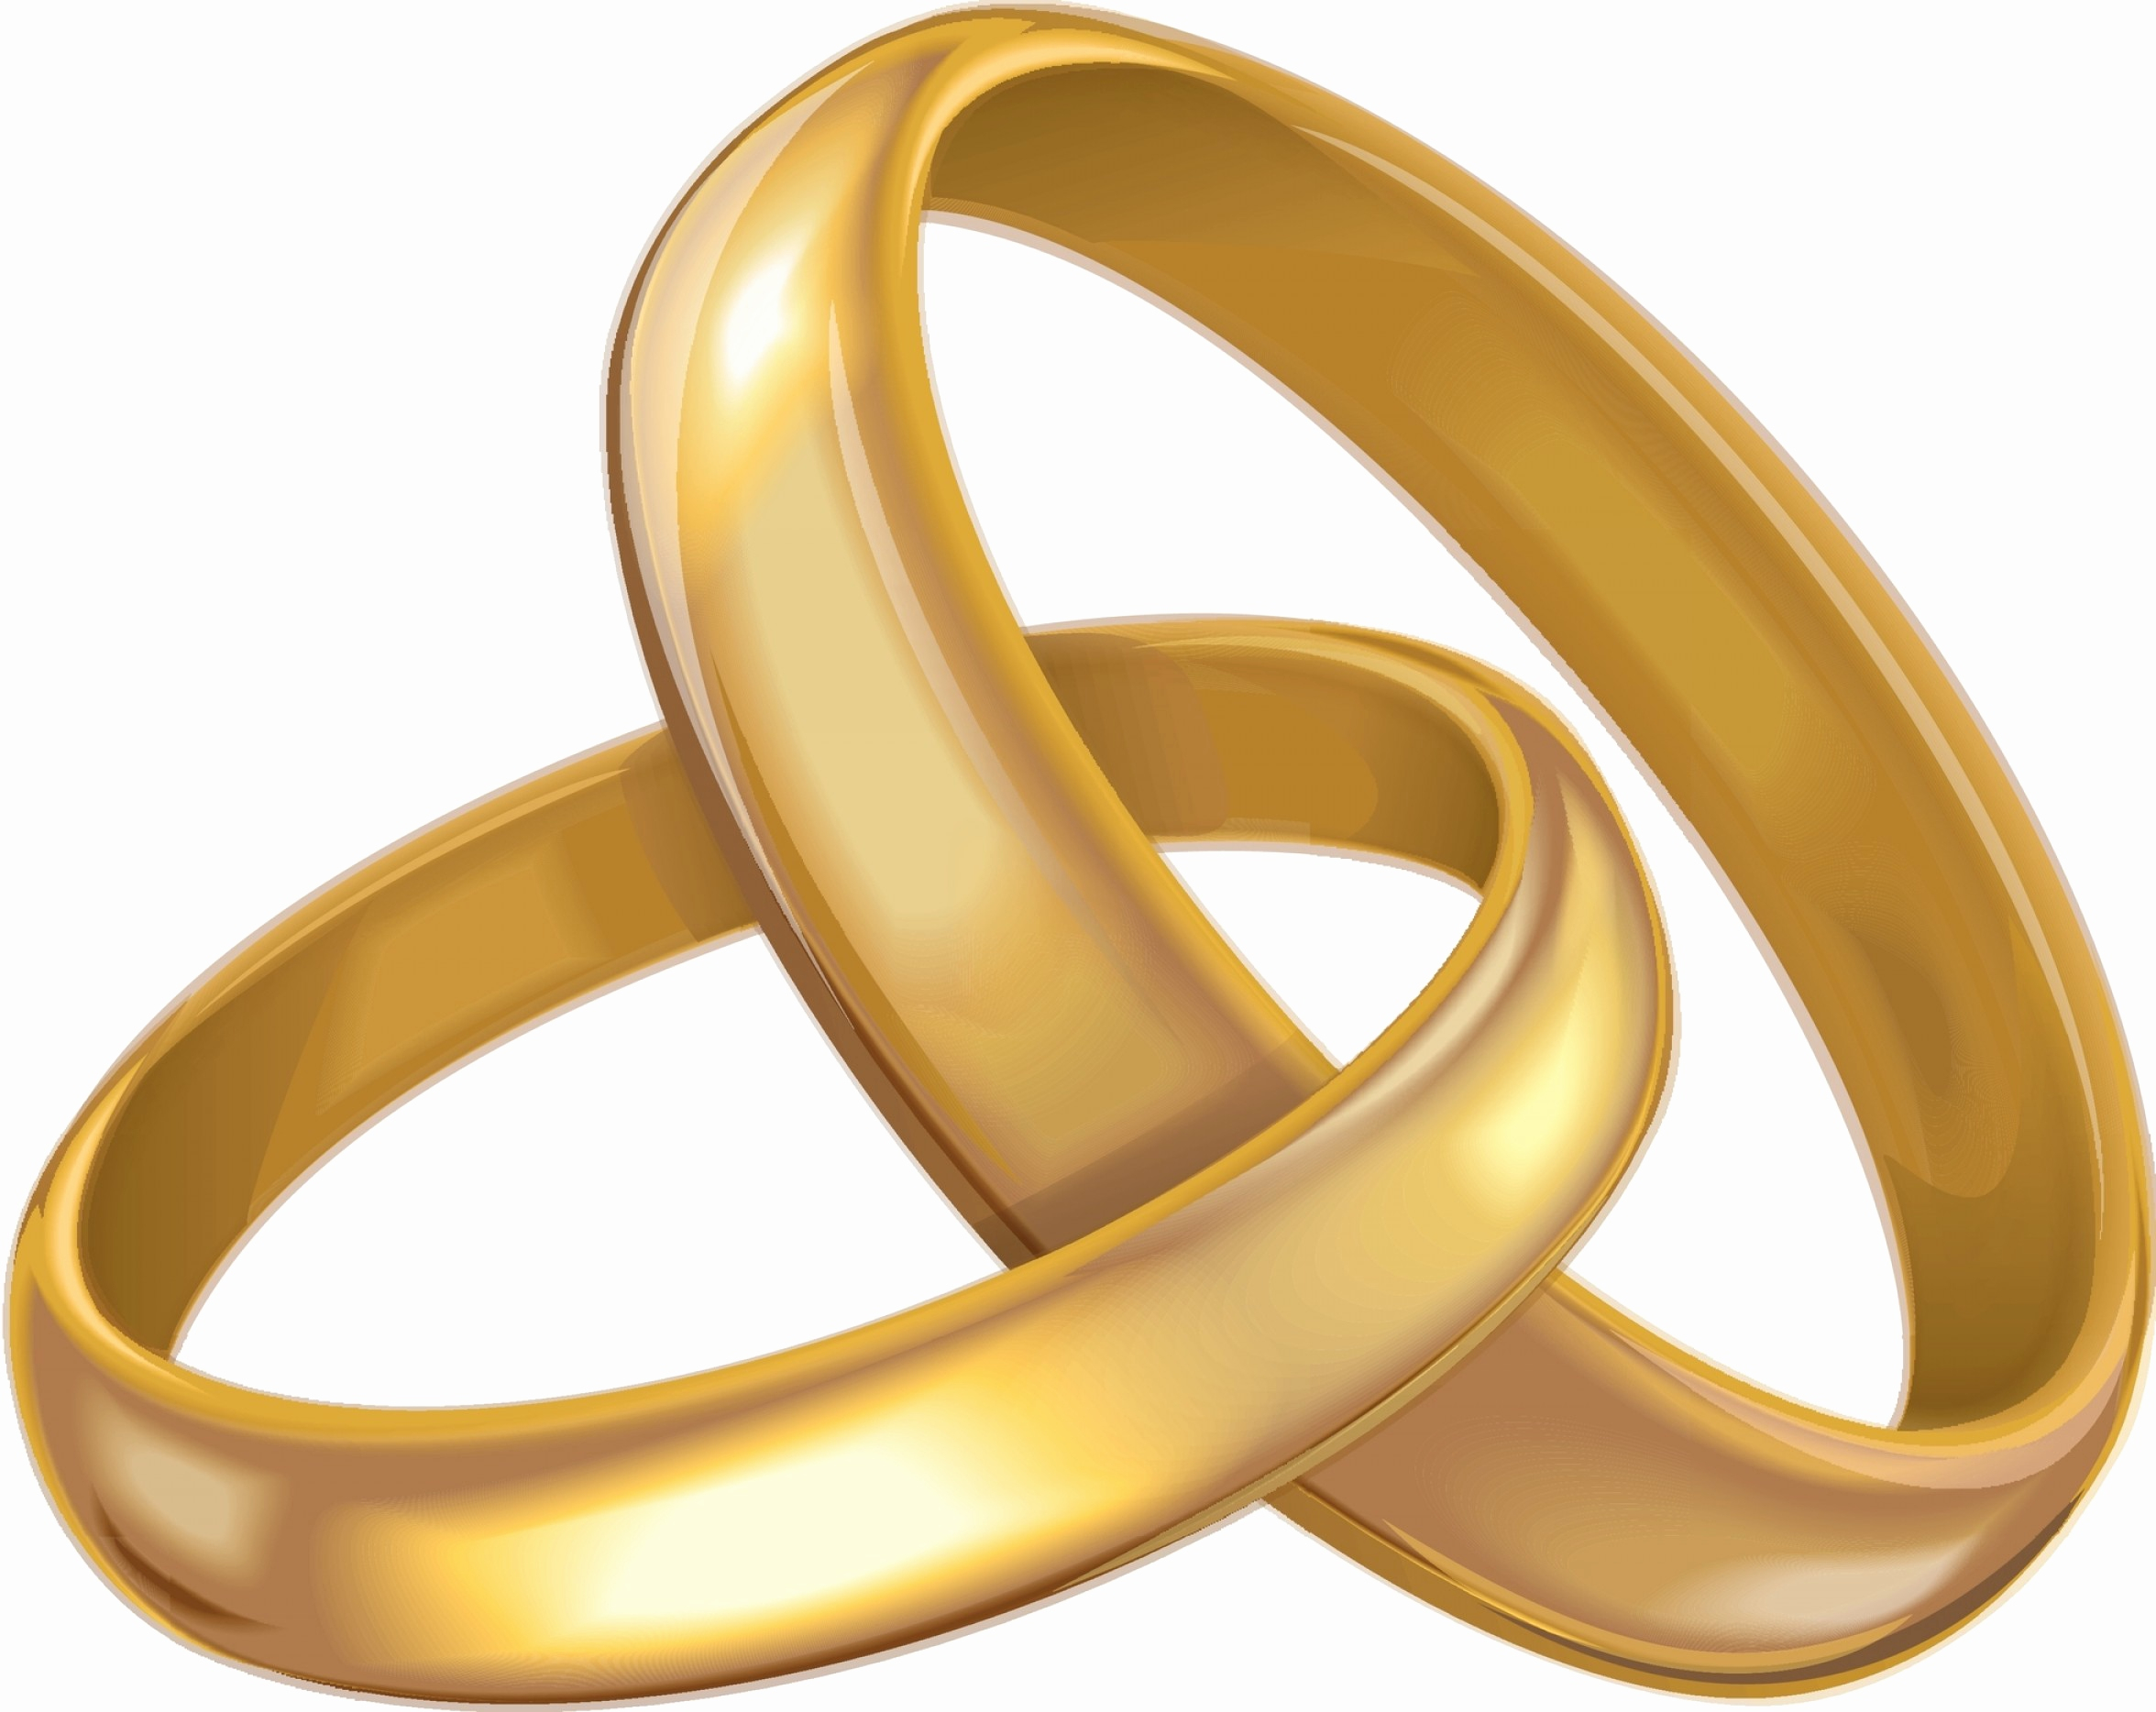 Interlocking Wedding Rings Drawing at GetDrawings Free download